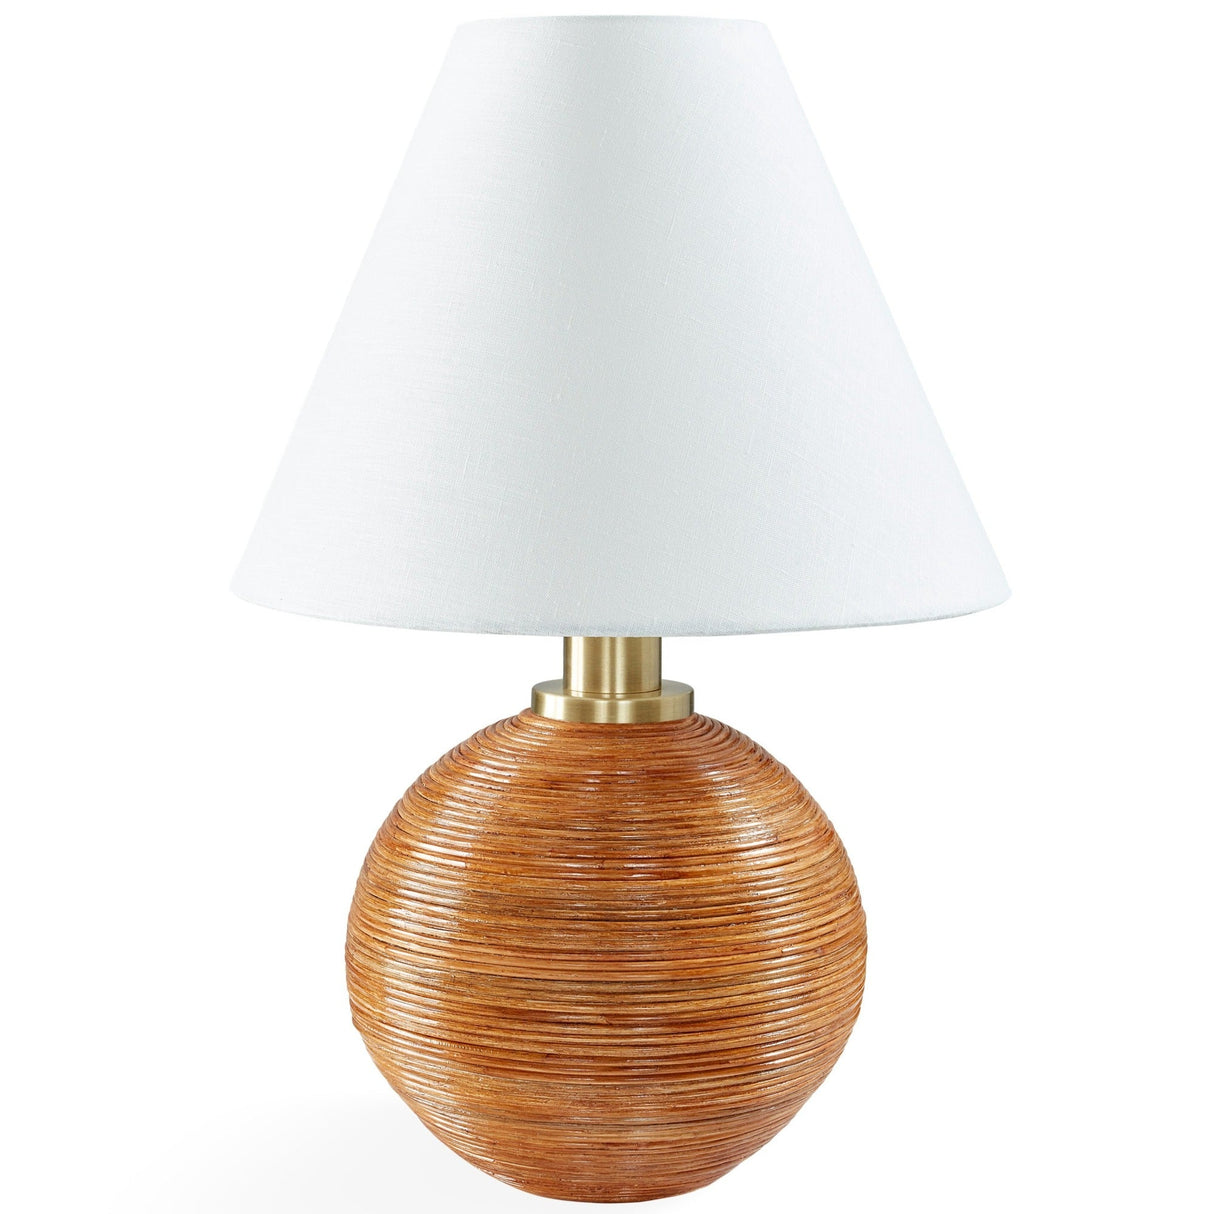 Jonathan Adler Riviera Accent Lamp Table Lamps robert-abbey-32294